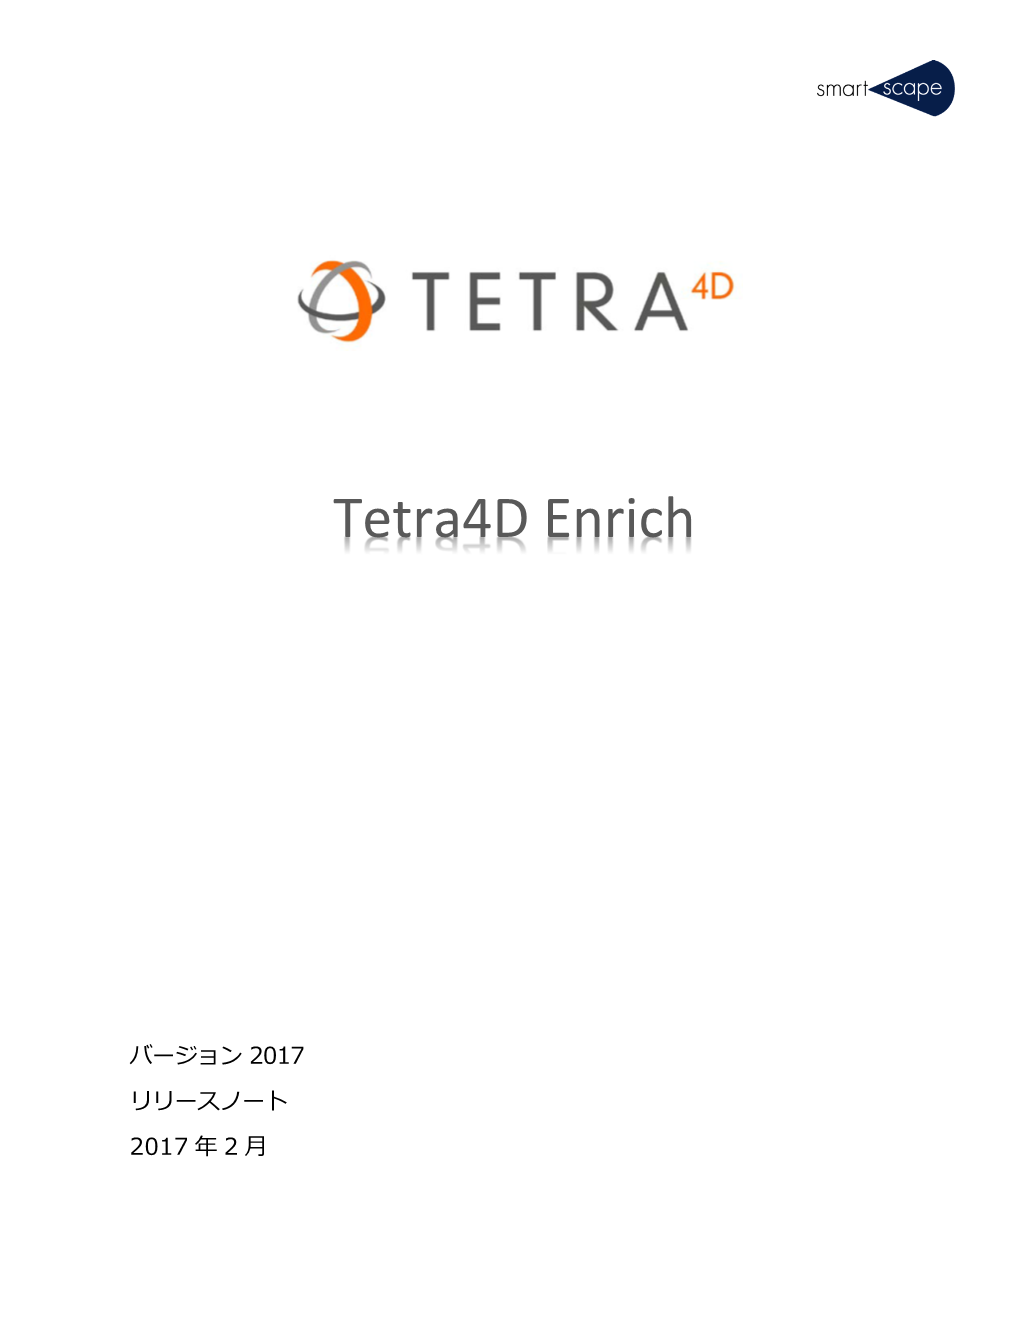 Tetra4d Enrich